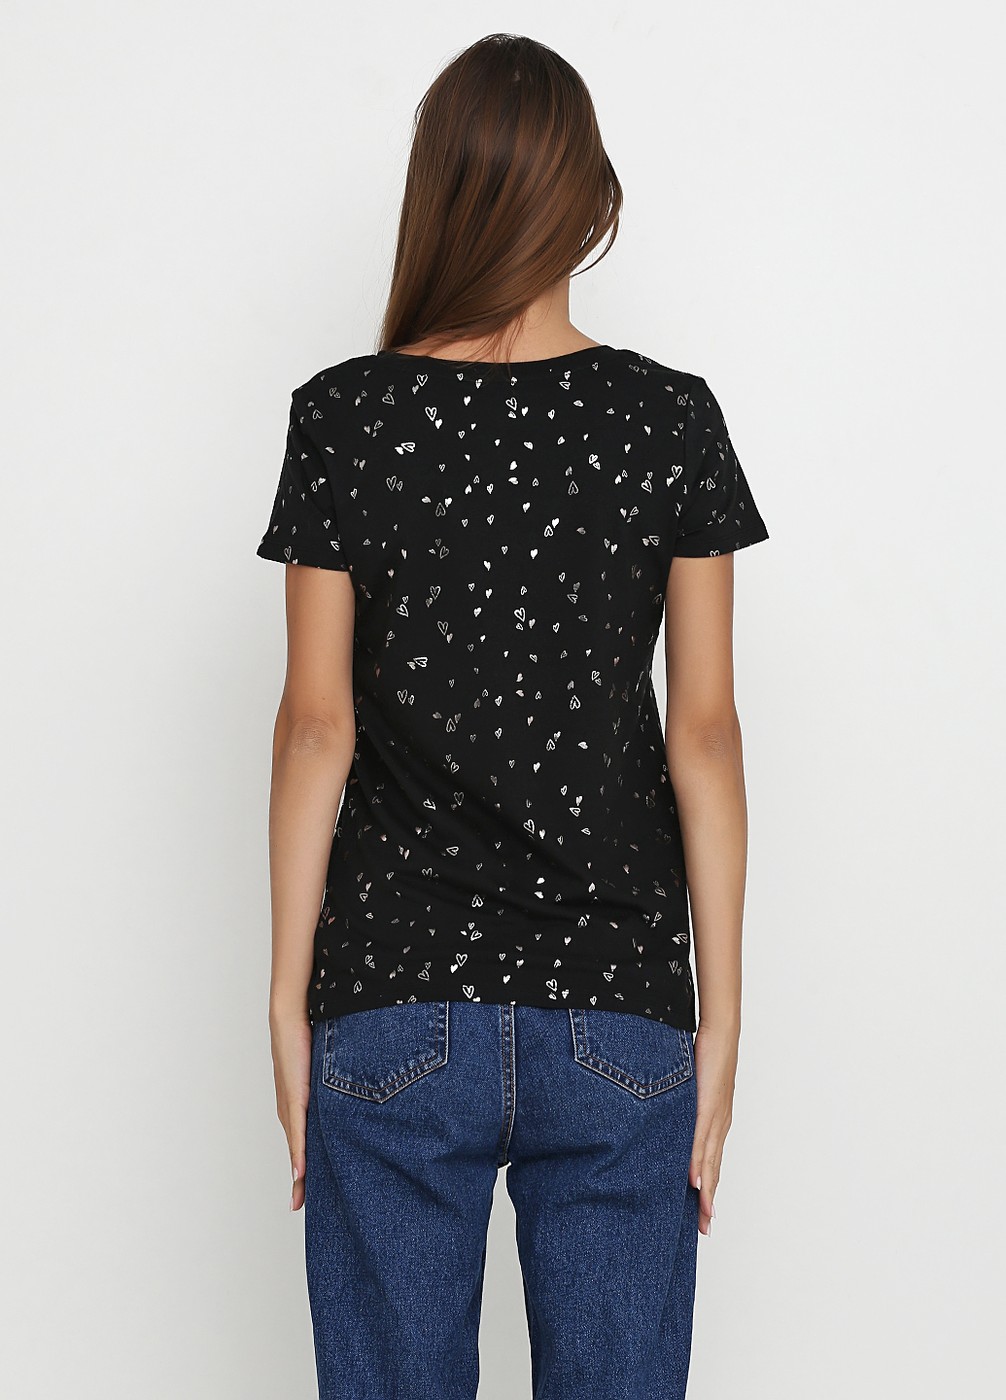 Черная футболка - женская футболка GAP, XS, XS